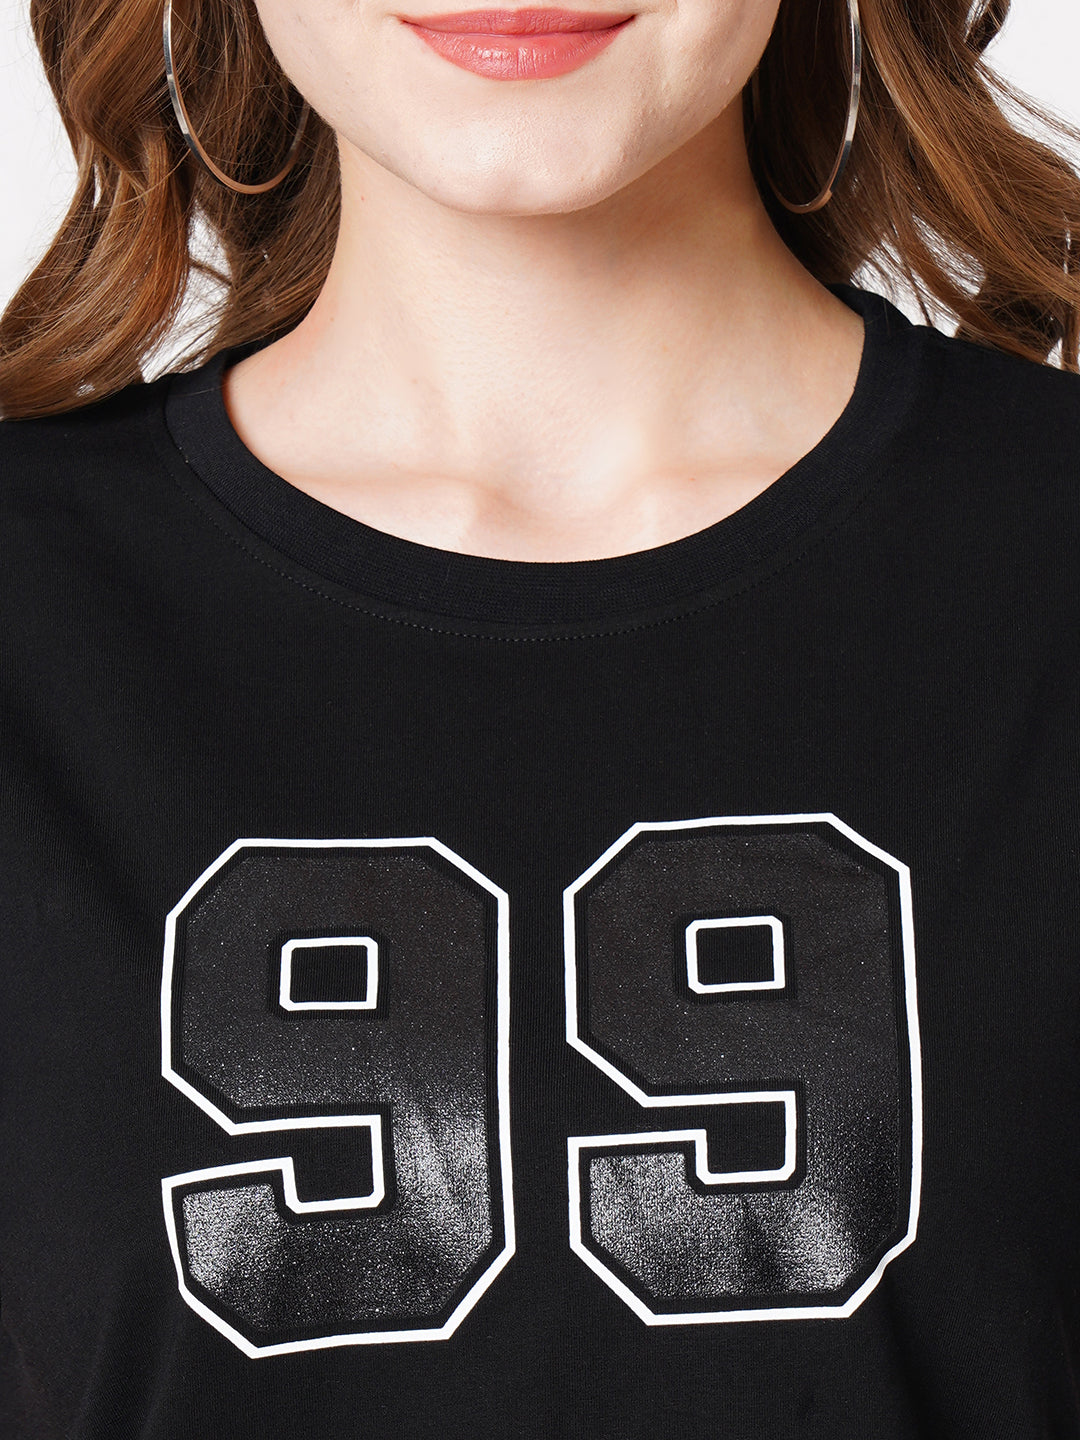 Women Typographic Print Slim Crop T-Shirt